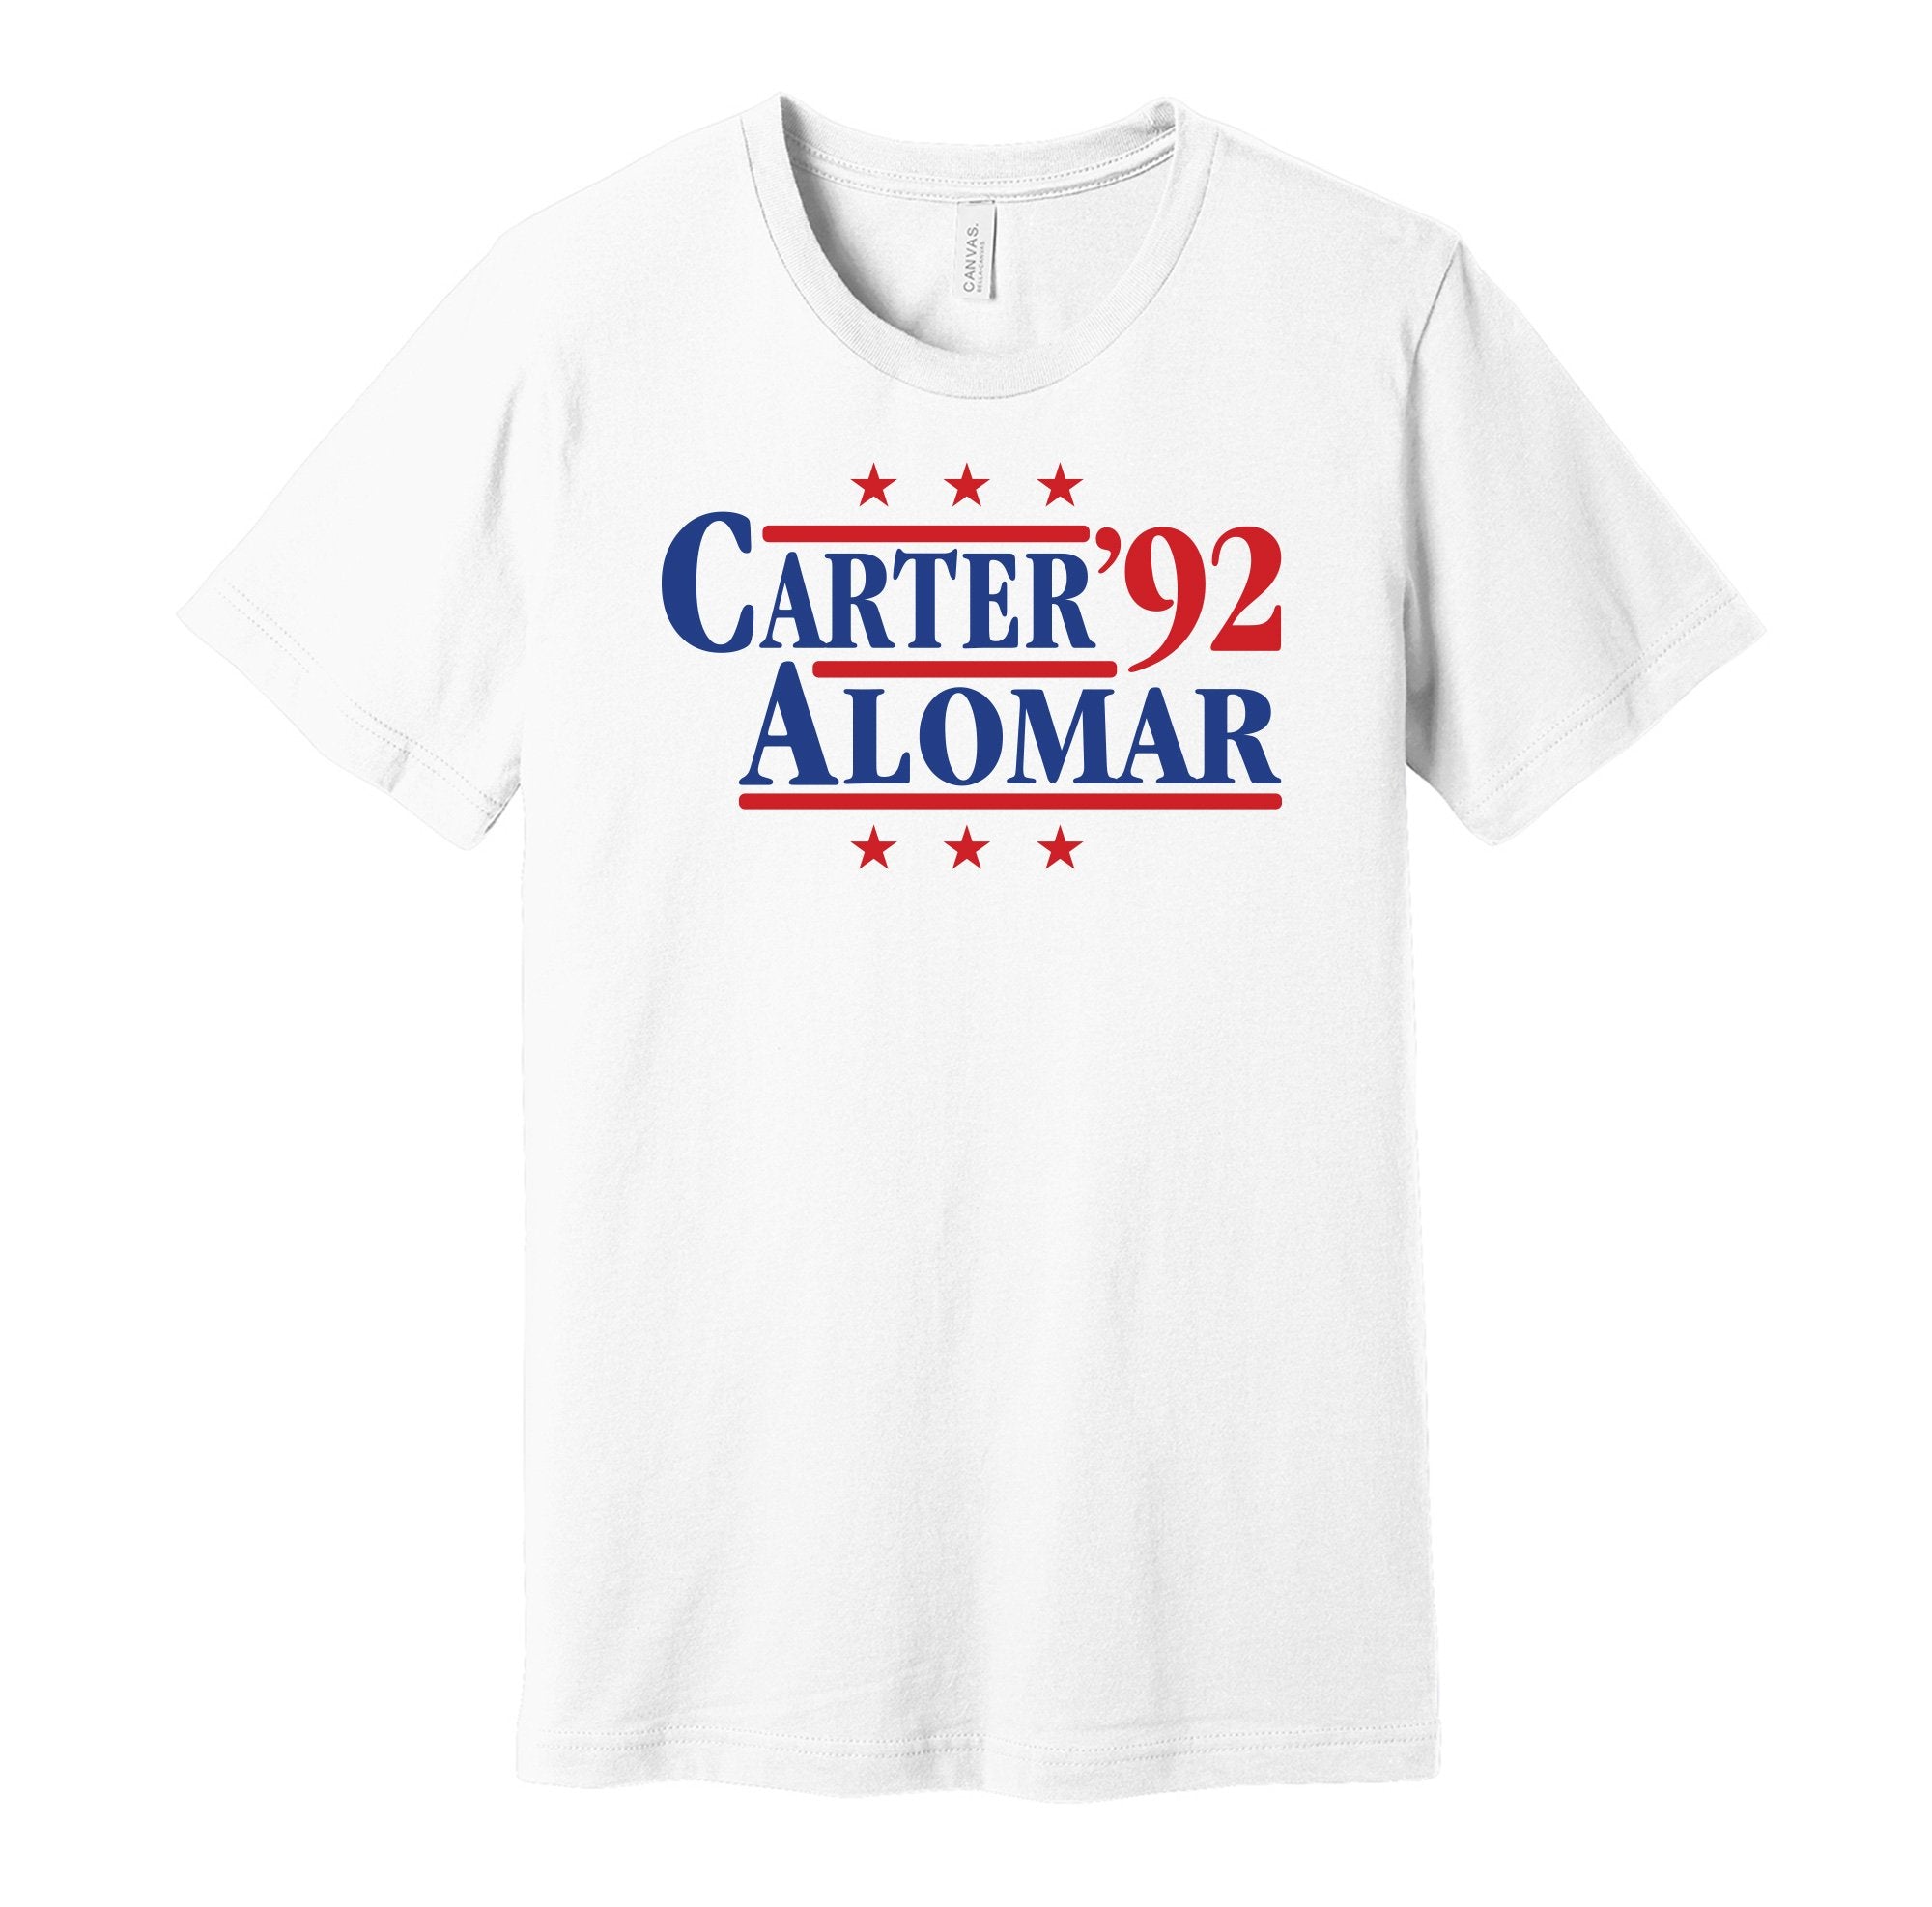 Joe Carter T-Shirts for Sale